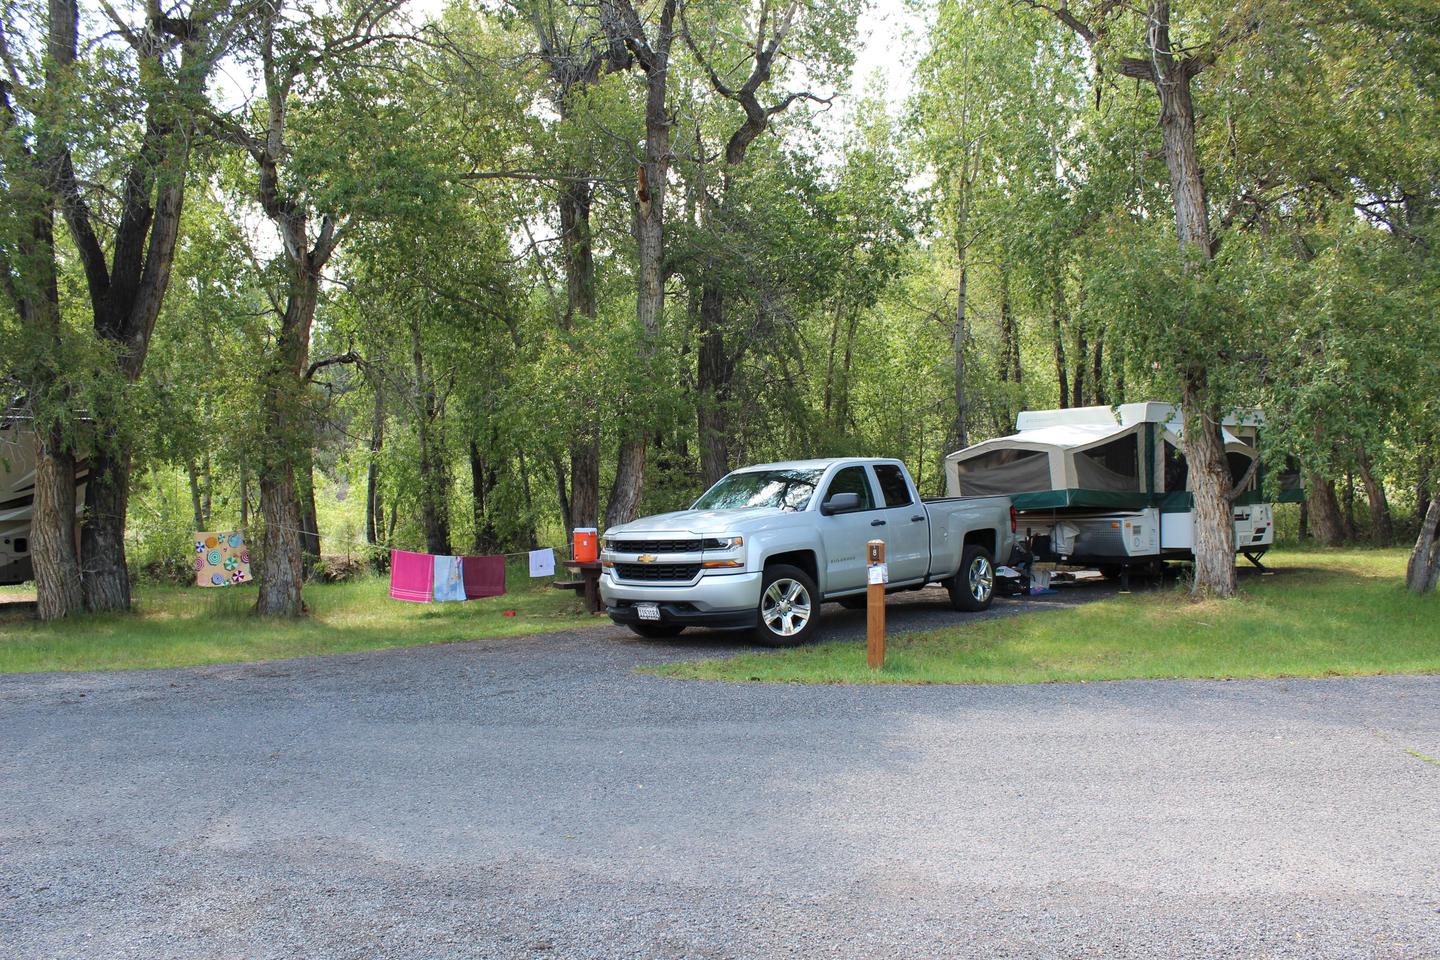 Bring you trailer!Fun camping